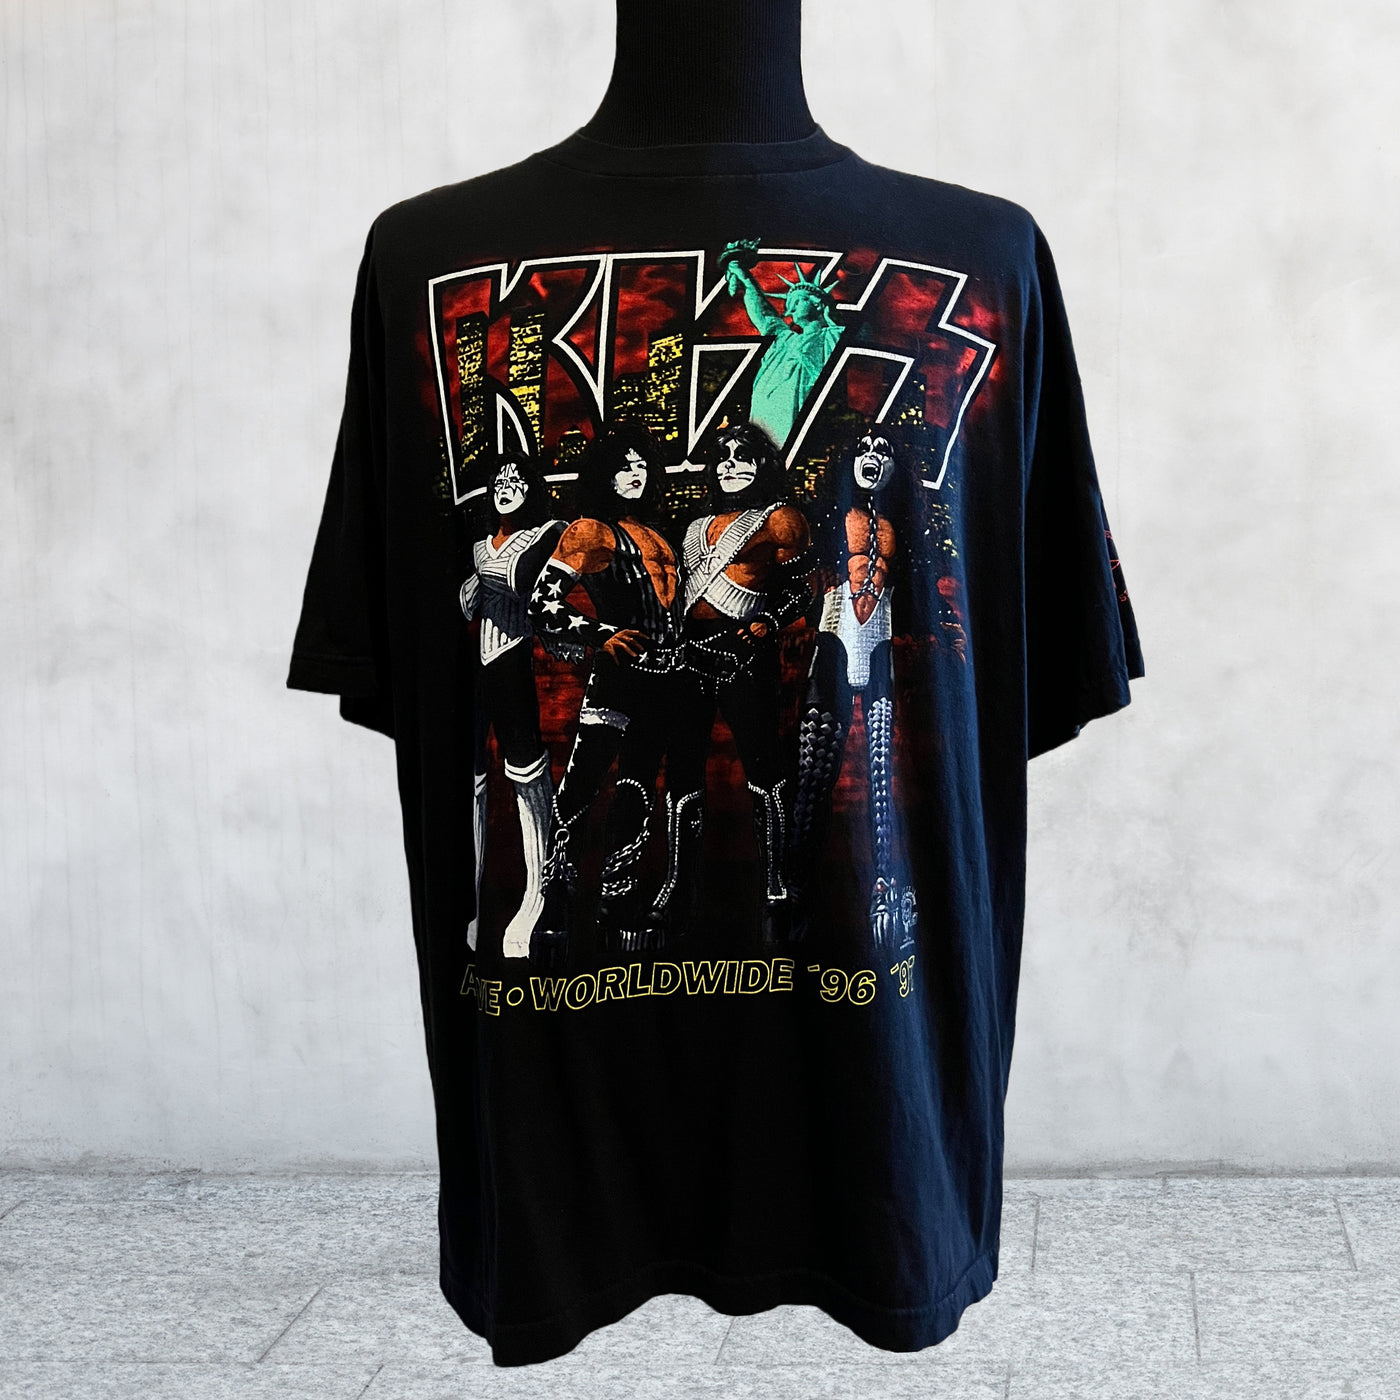 Vintage Kiss Madison Square Garden 1996 Alive Worldwide Tour T-Shirt.  XL